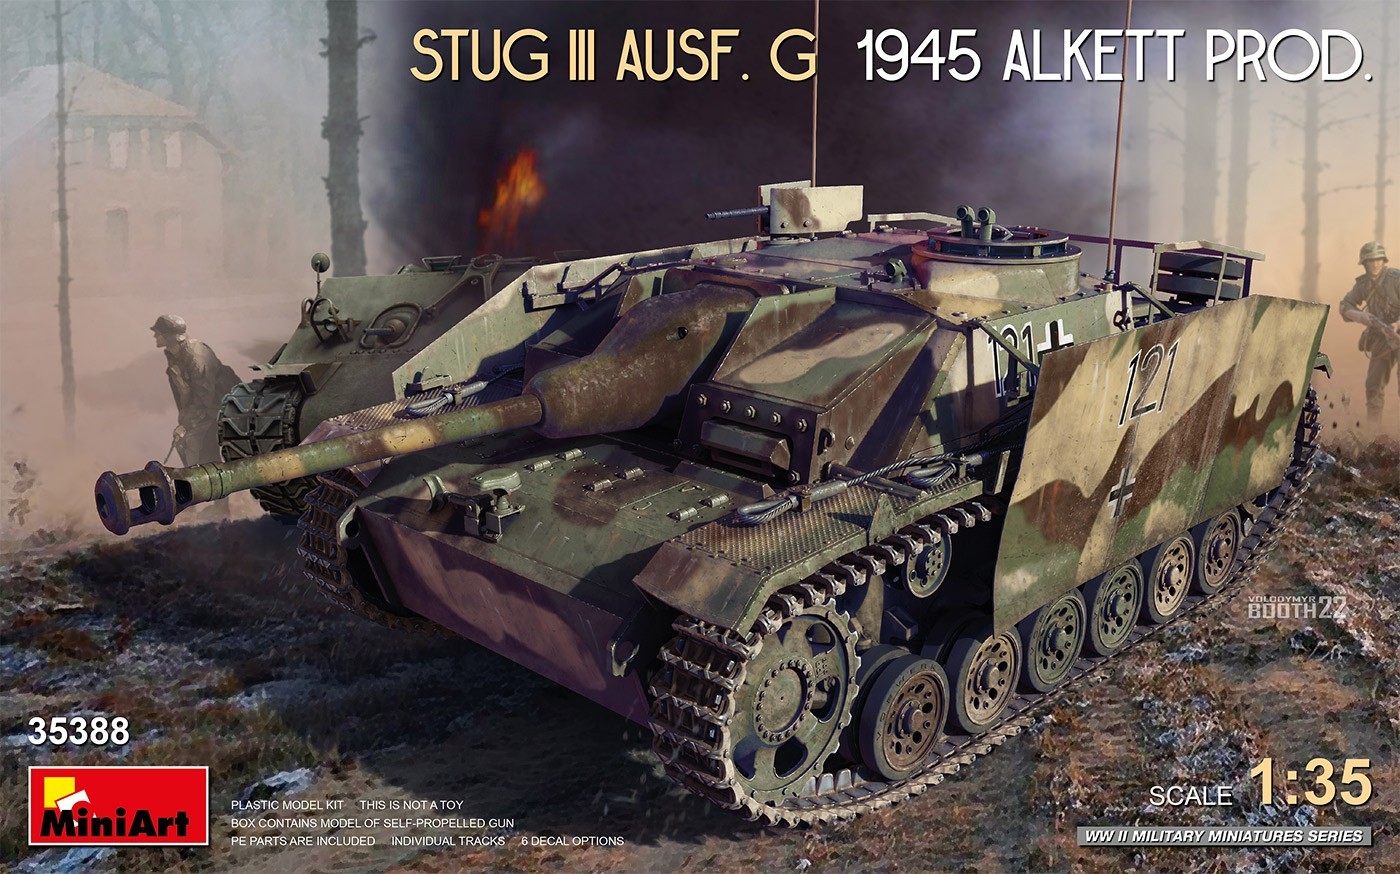 MiniArt to Release Highly Detailed 1/35 StuG III Ausf. G 1945 Alkett Prod. Model Kit Box Art